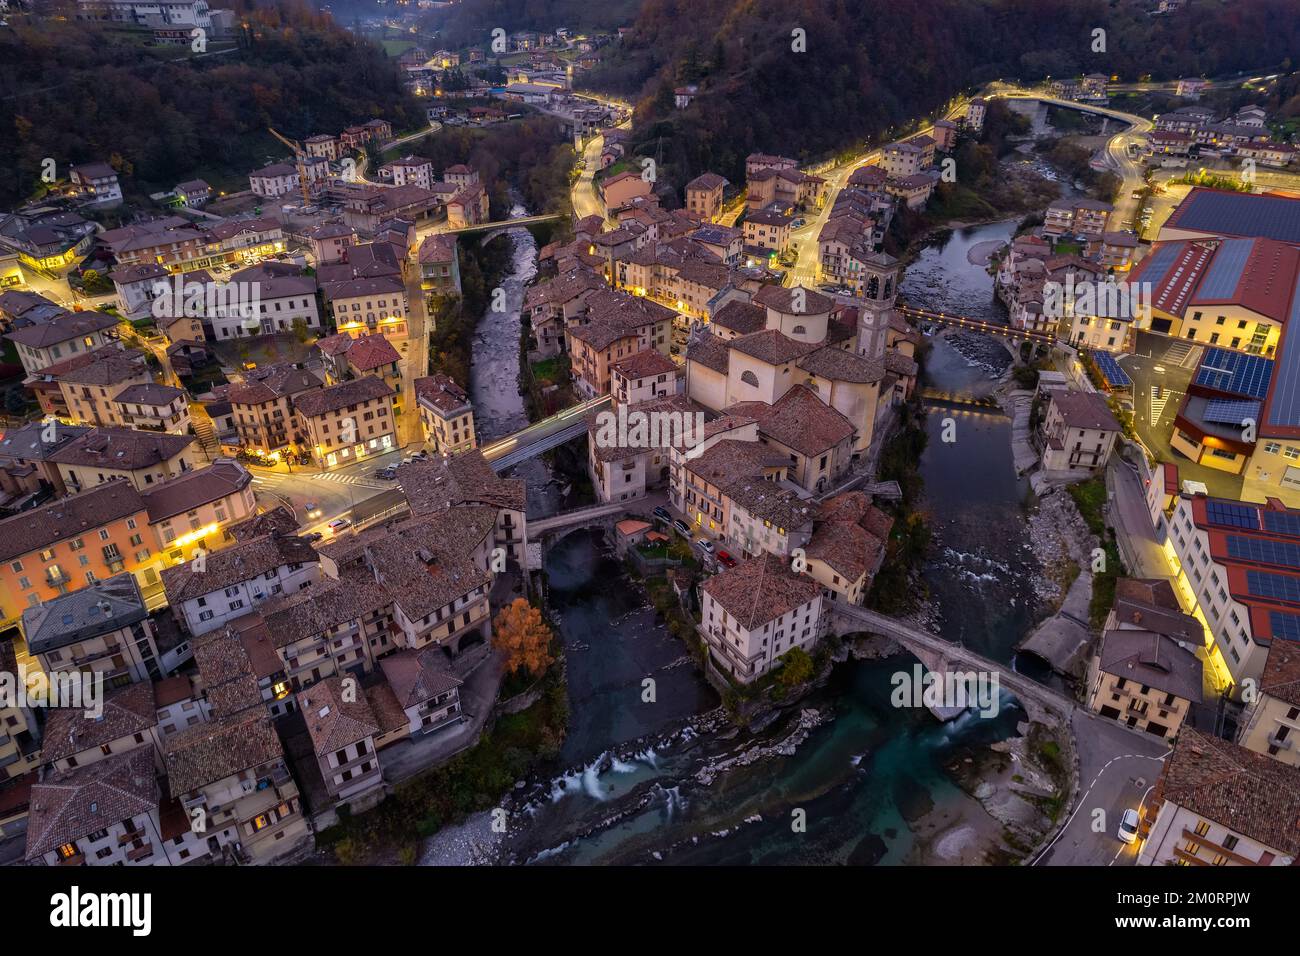 Aerial villagescape with mountain backdrop at night, San Giovanni Bianco, Val Brembana, Bergamo, Lombardy, Italy Stock Photo